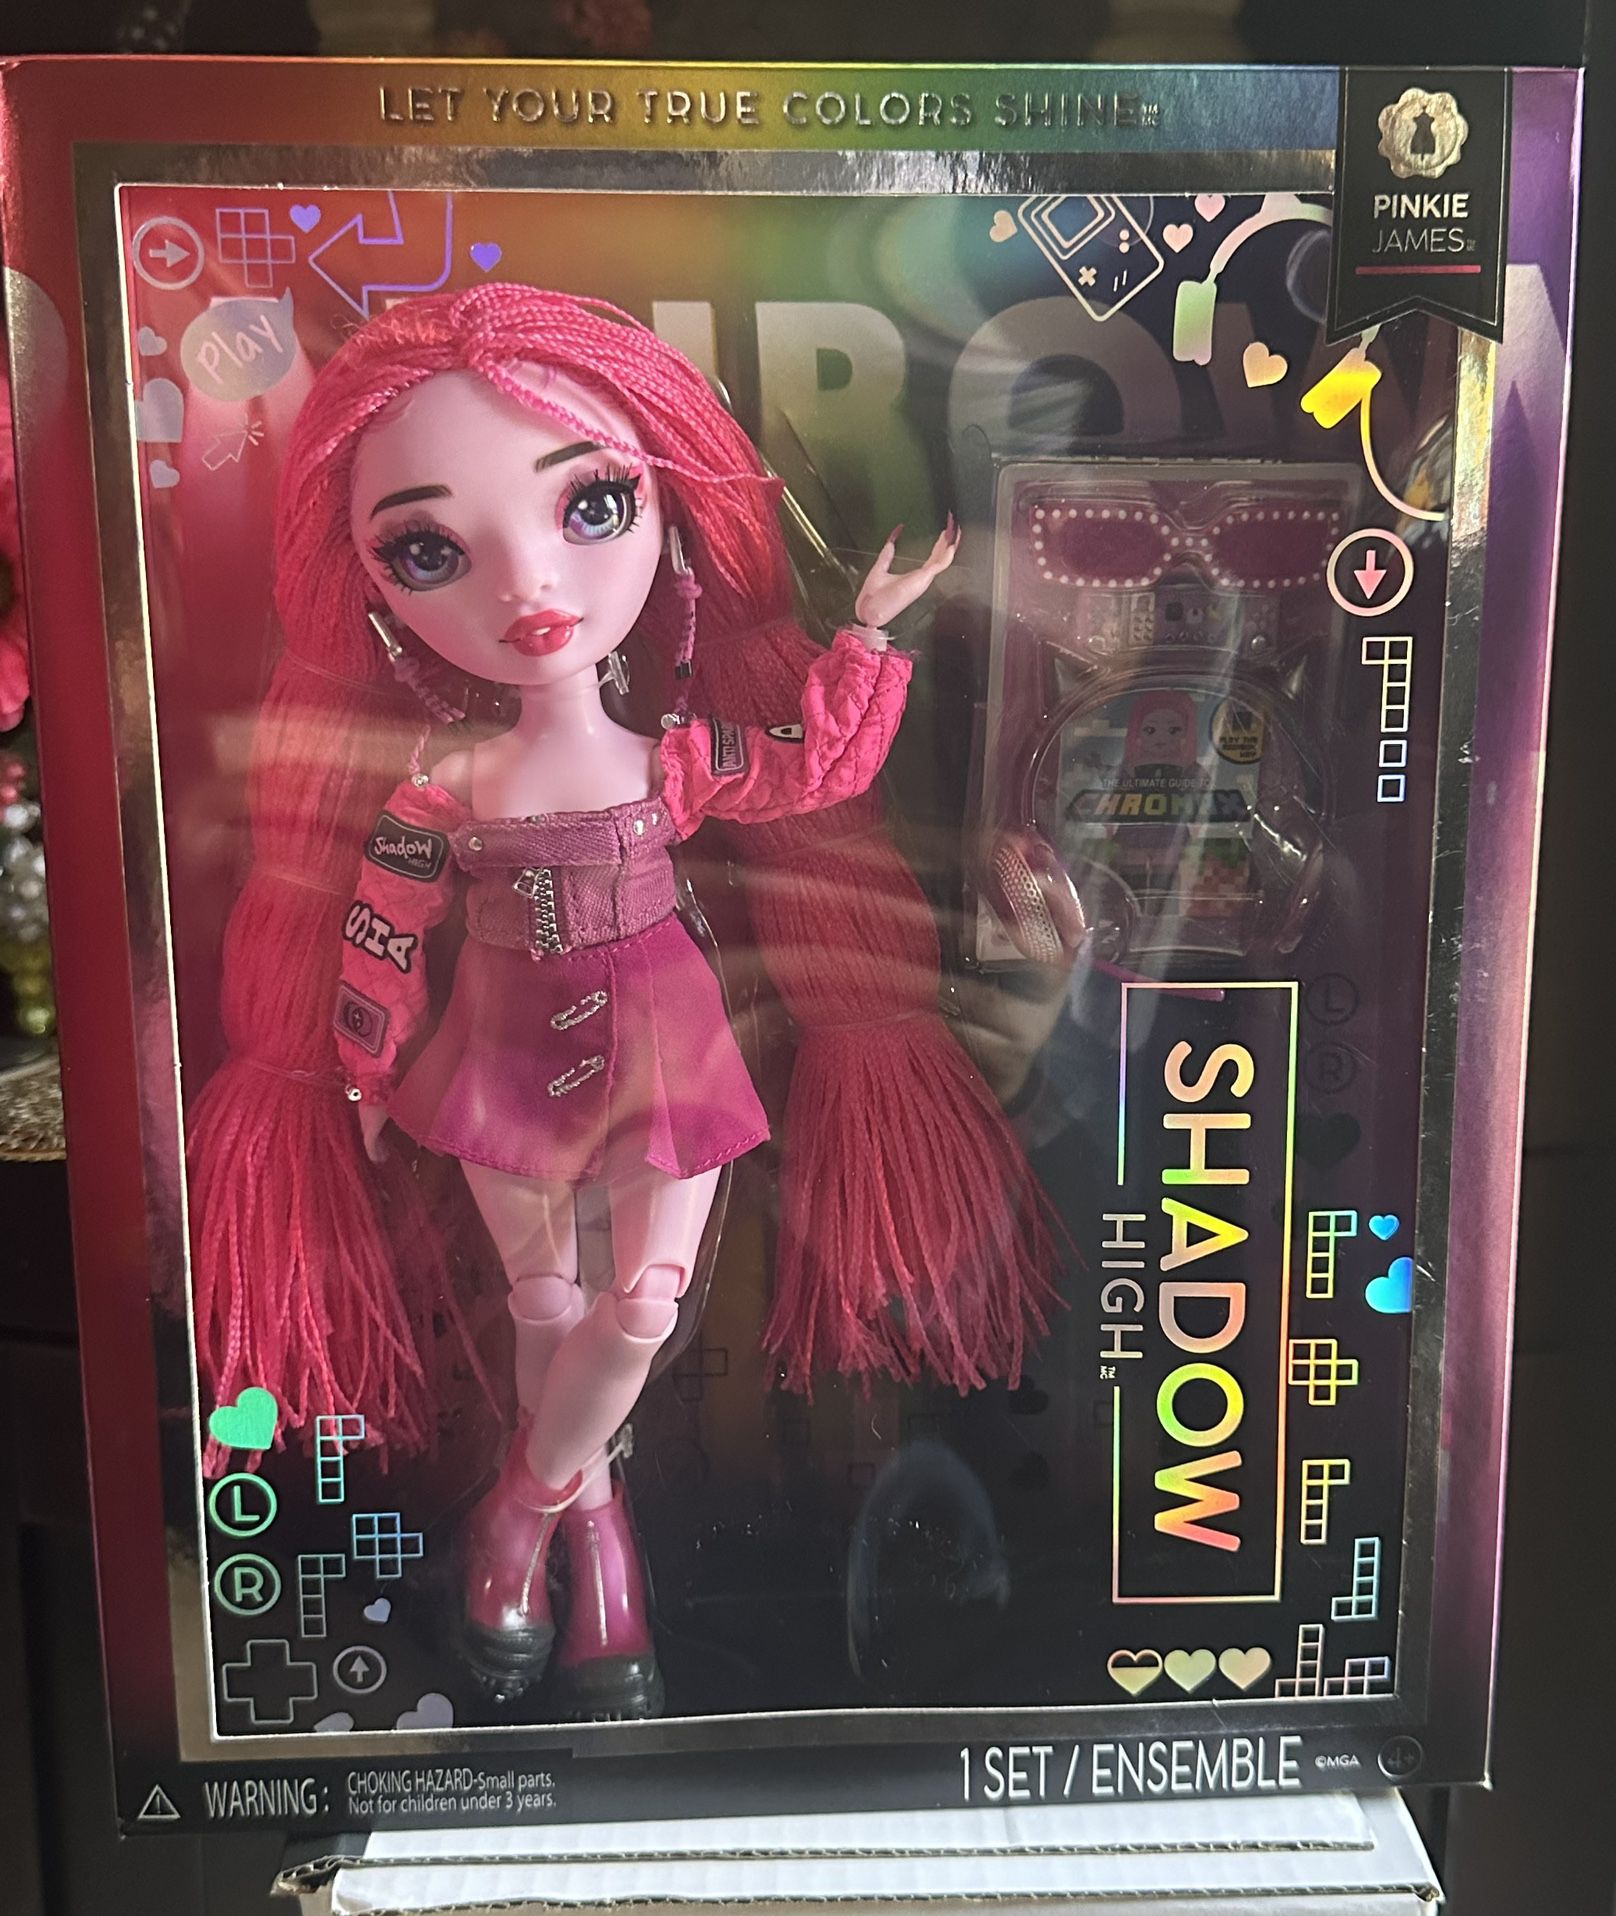 Girls Rainbow High Doll Pinkie James $25